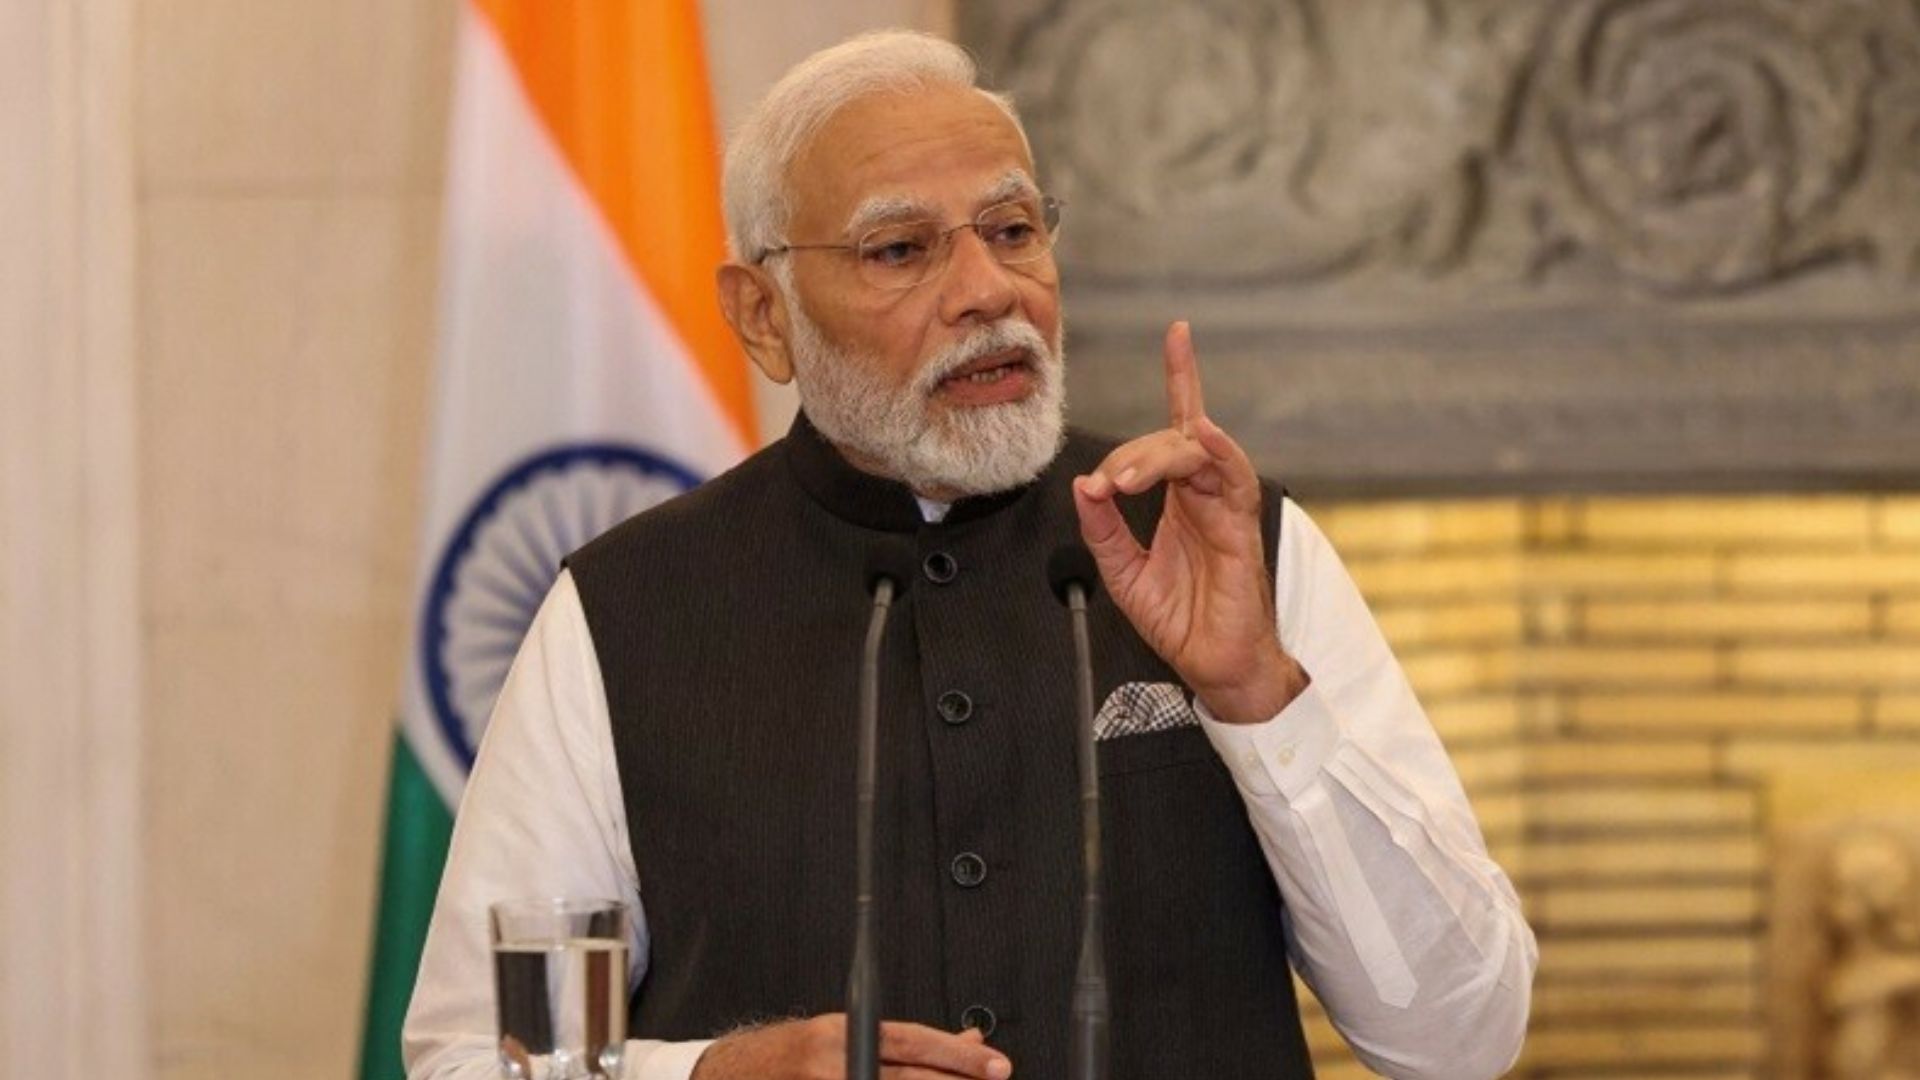 PM Modi Declares India Among World’s Fastest-Growing Major Economies